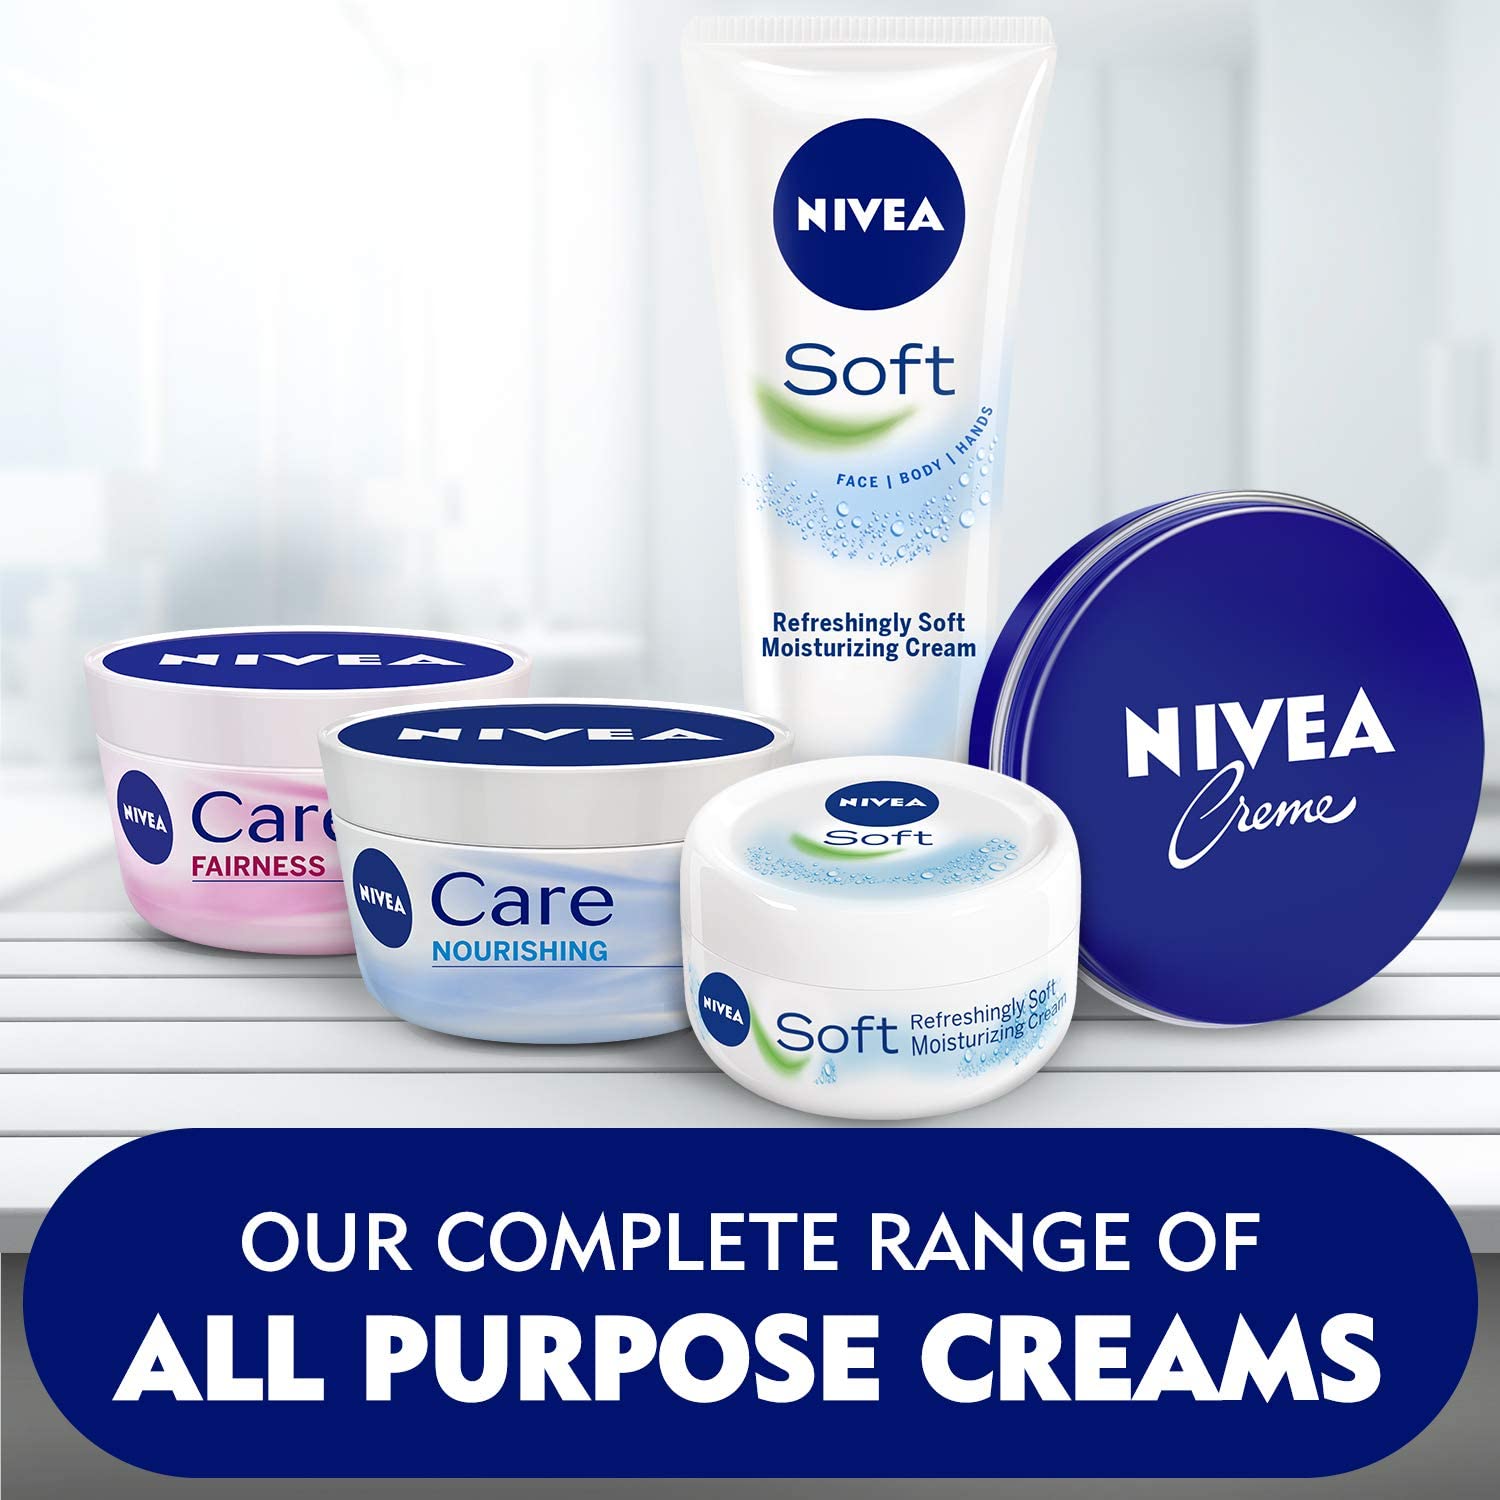 NIVEA Creme Moisturising Cream, Universal All Pourpose Face Body Hands, Tin 150ml